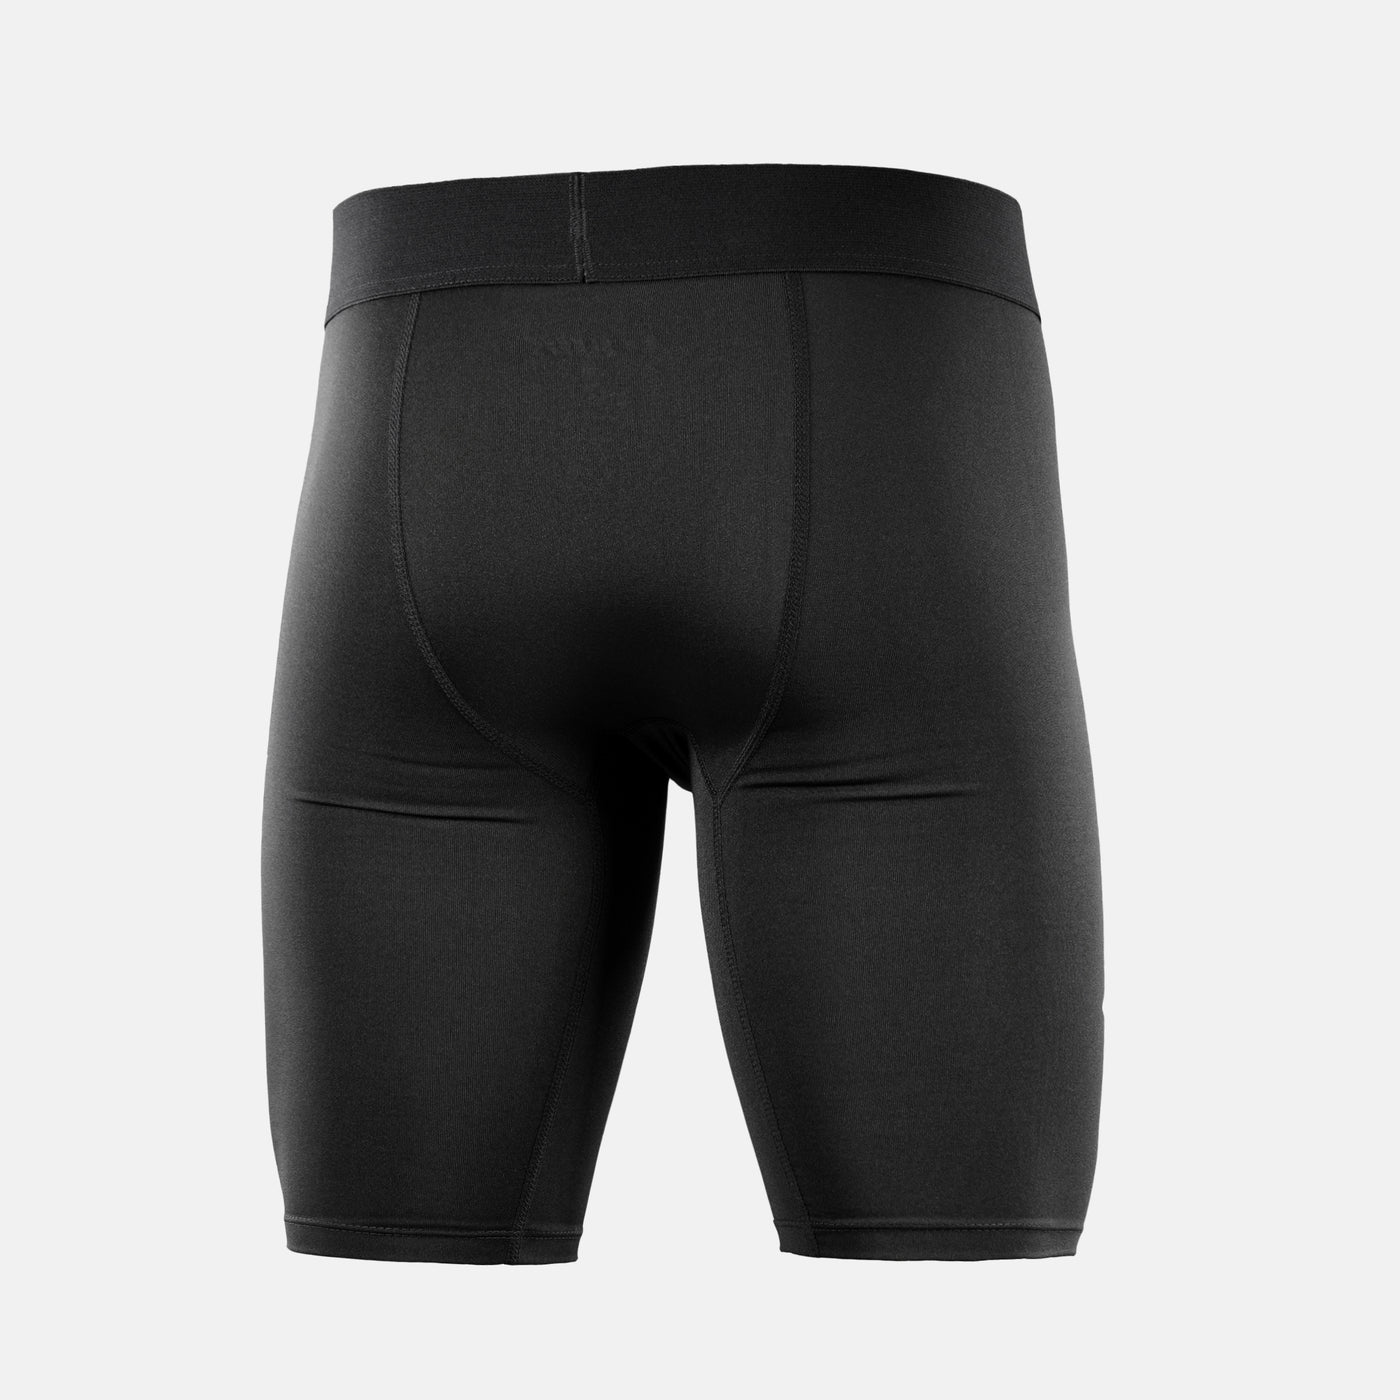 Basic Black Compression Shorts